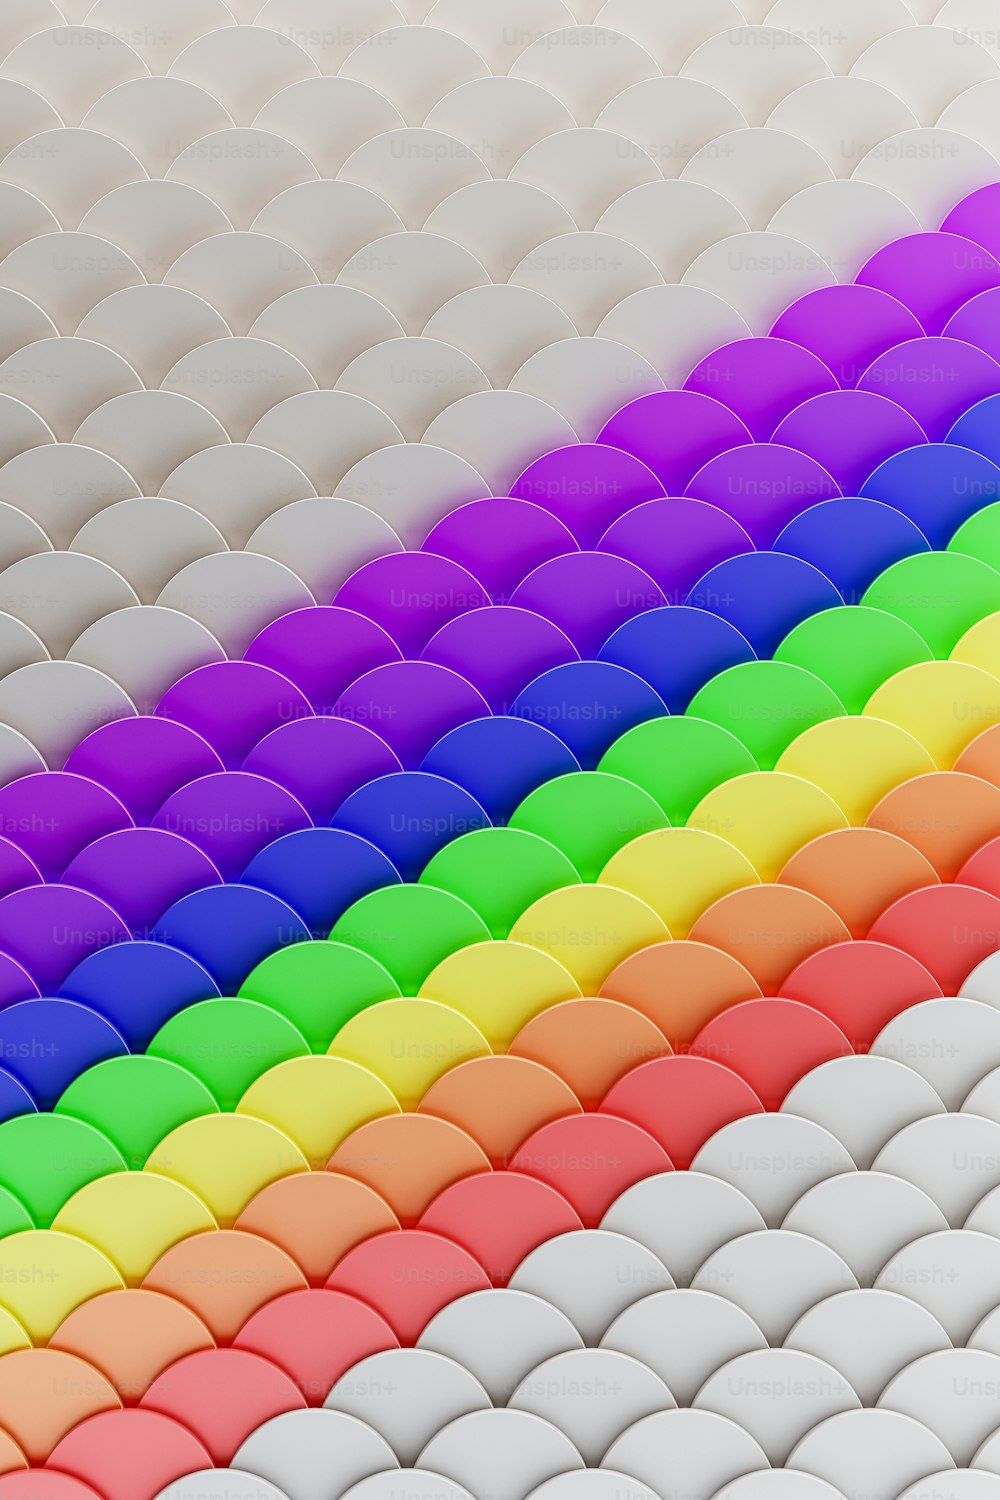 Color Blocks Pictures  Download Free Images on Unsplash